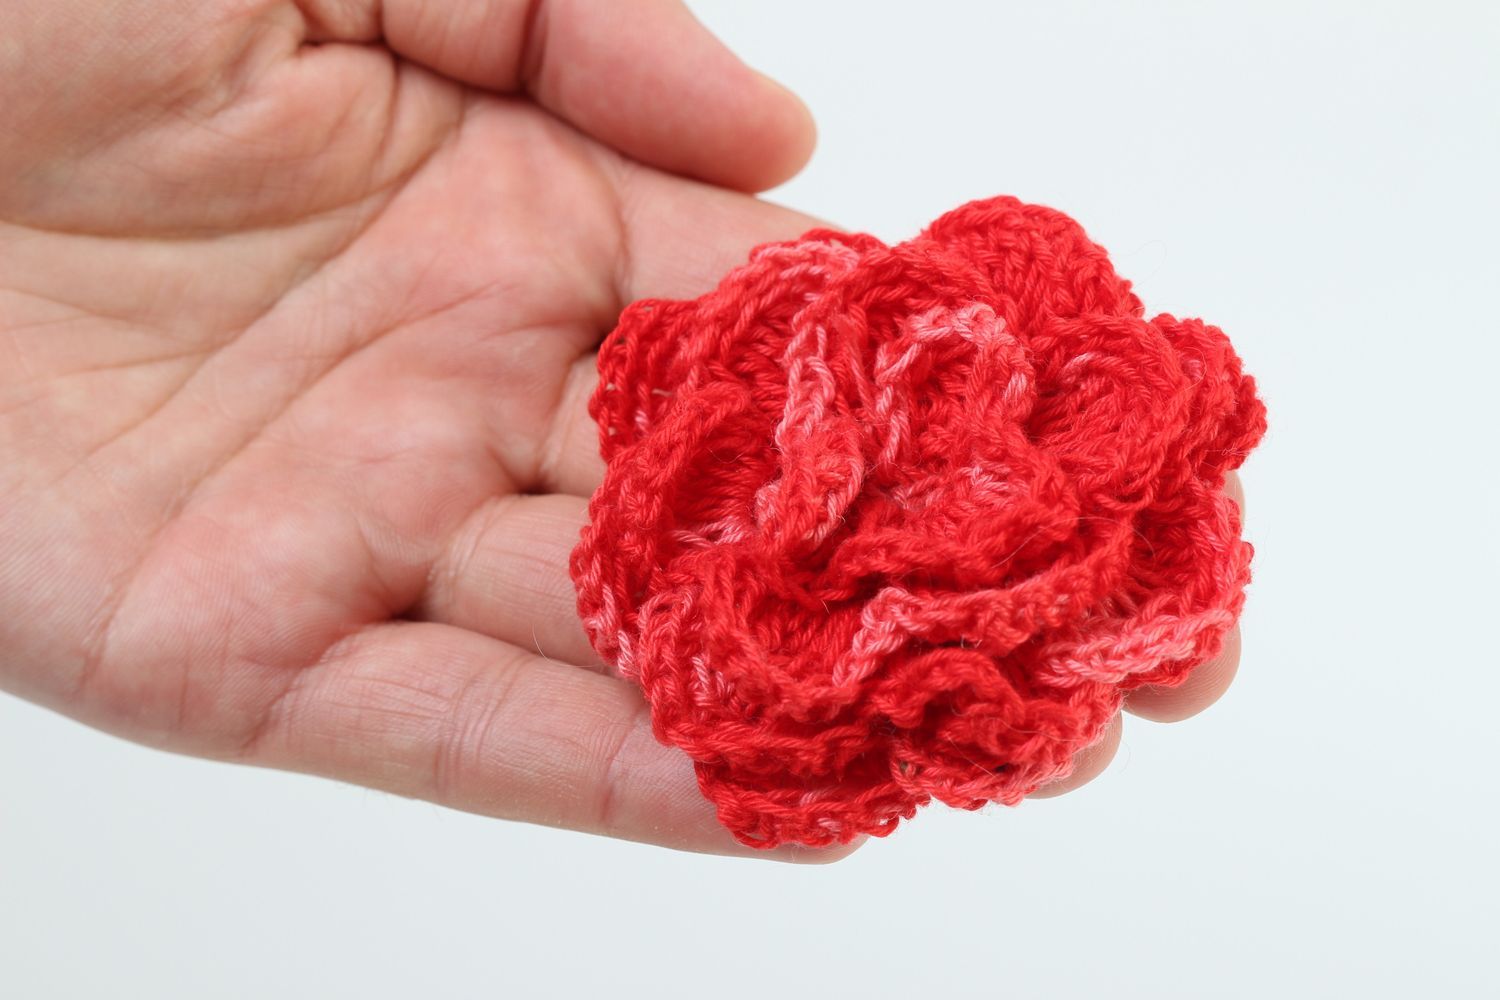 Handmade crocheted flower decorative flowers crochet ideas homemade crafts photo 5